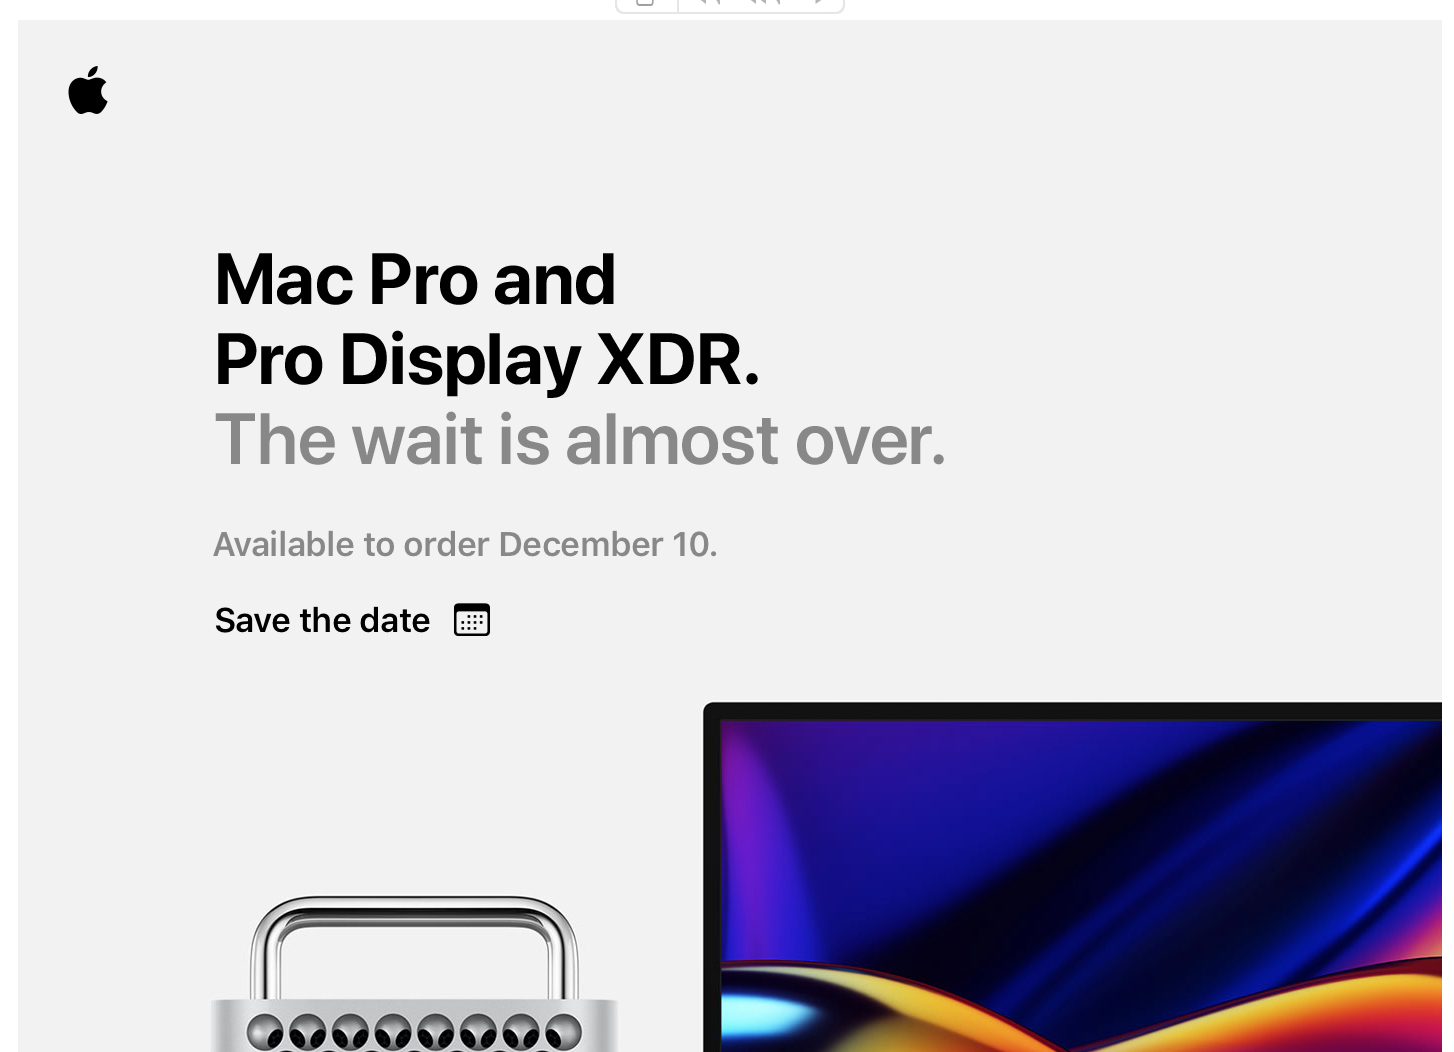 Mac Pro orders